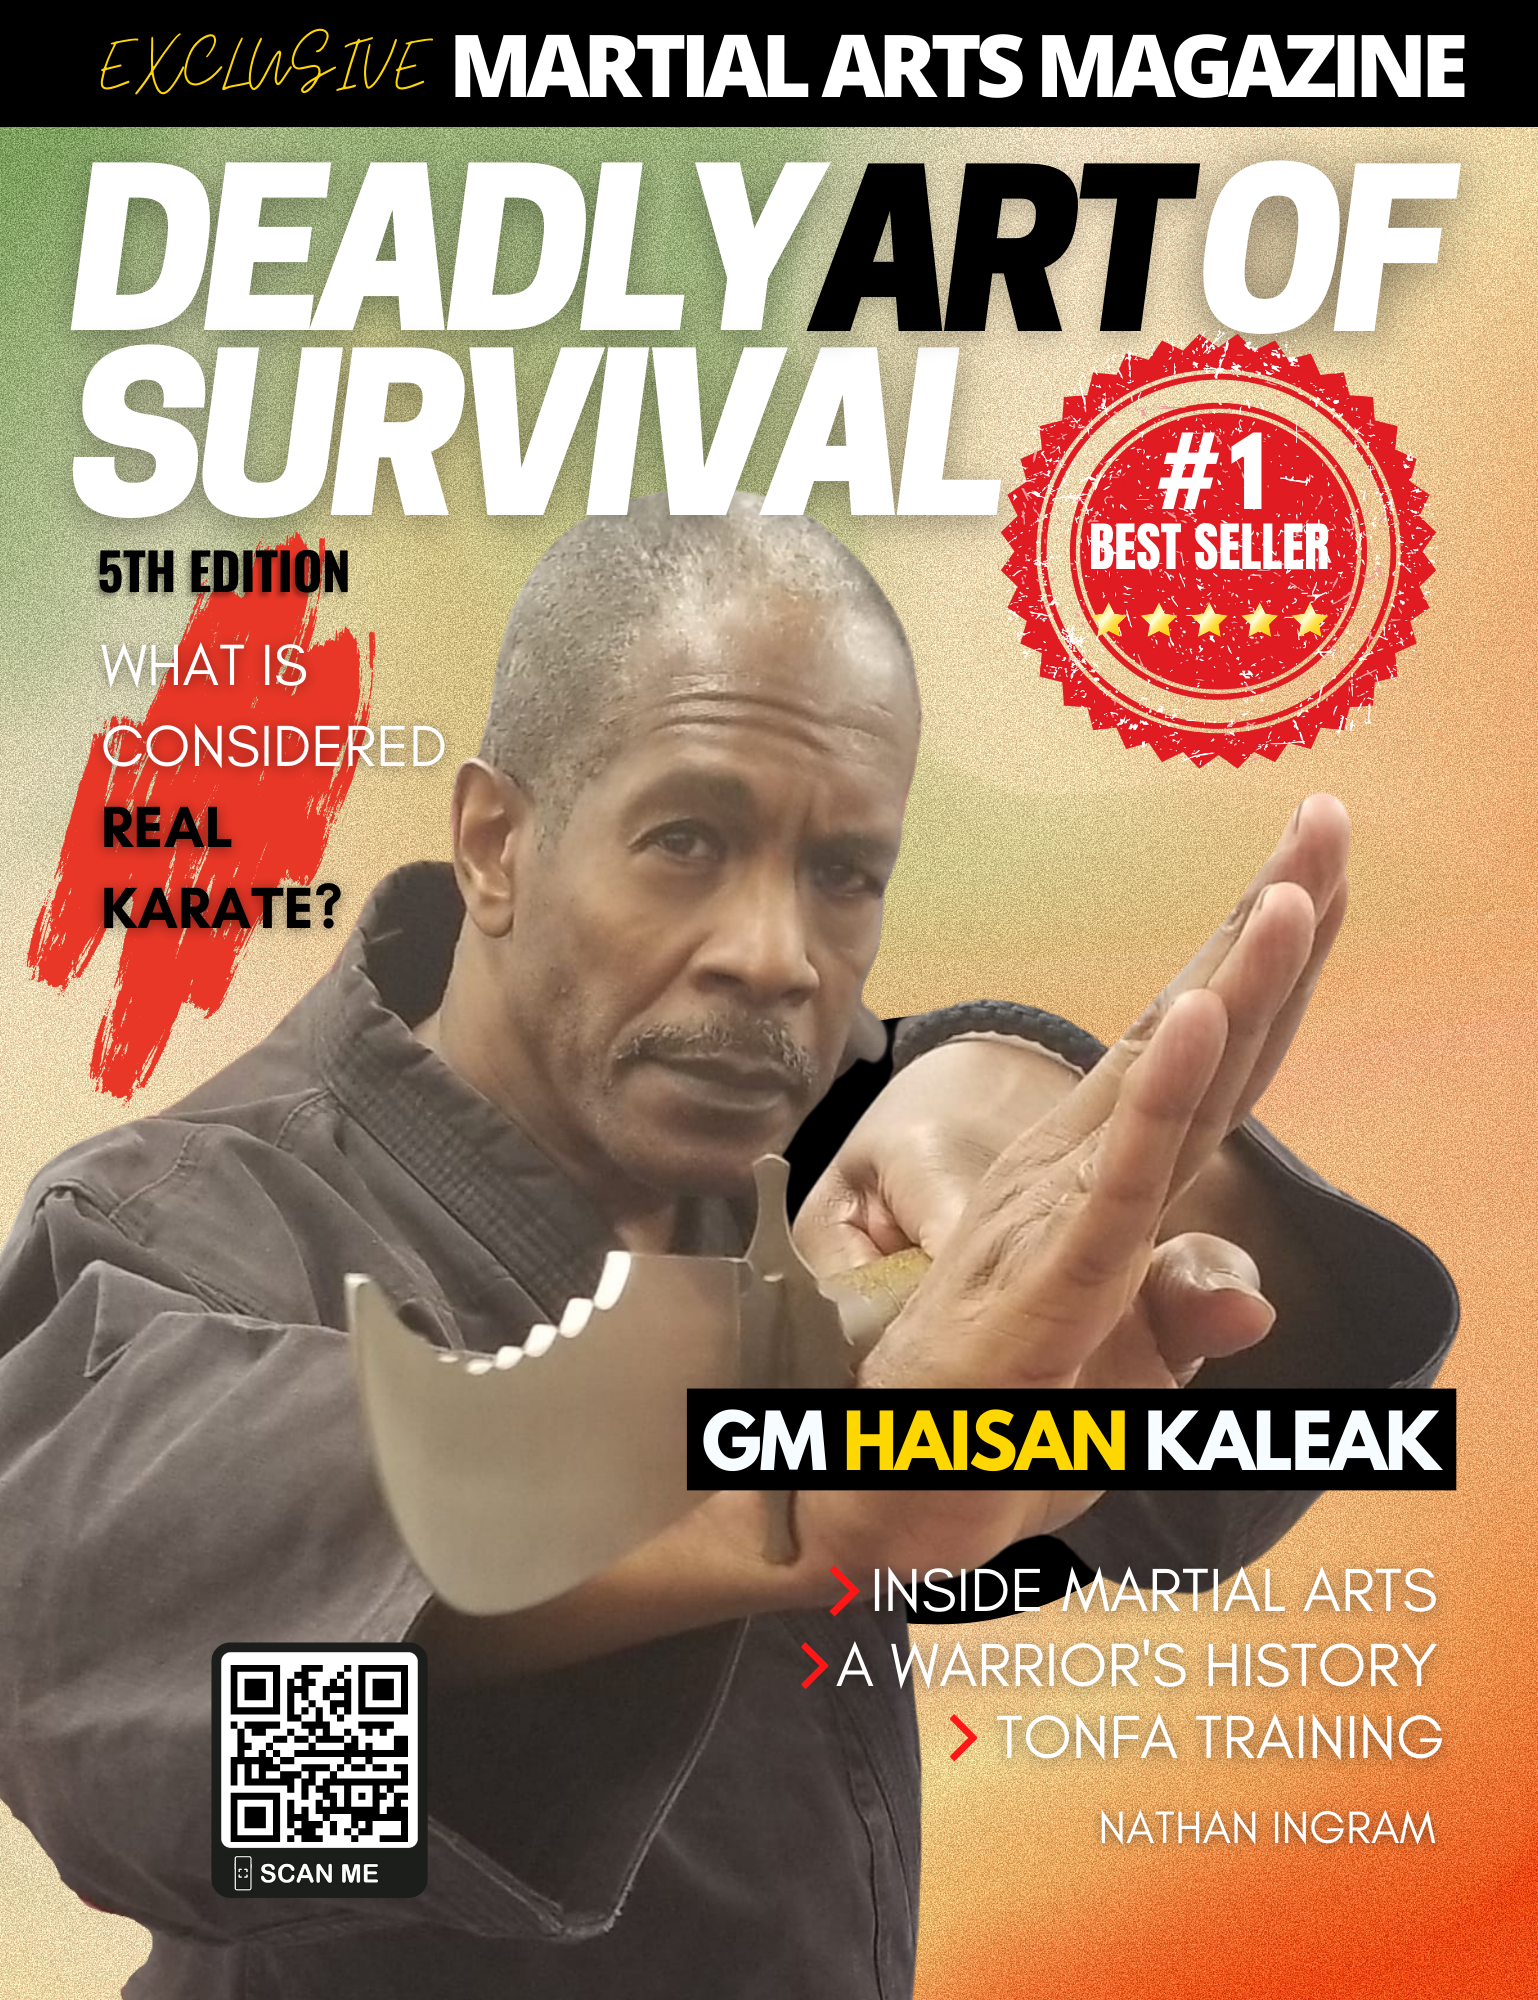 (Free Sample) Deadly Art of Survival Magazine 5th Edition deadlyartofsurvival.com